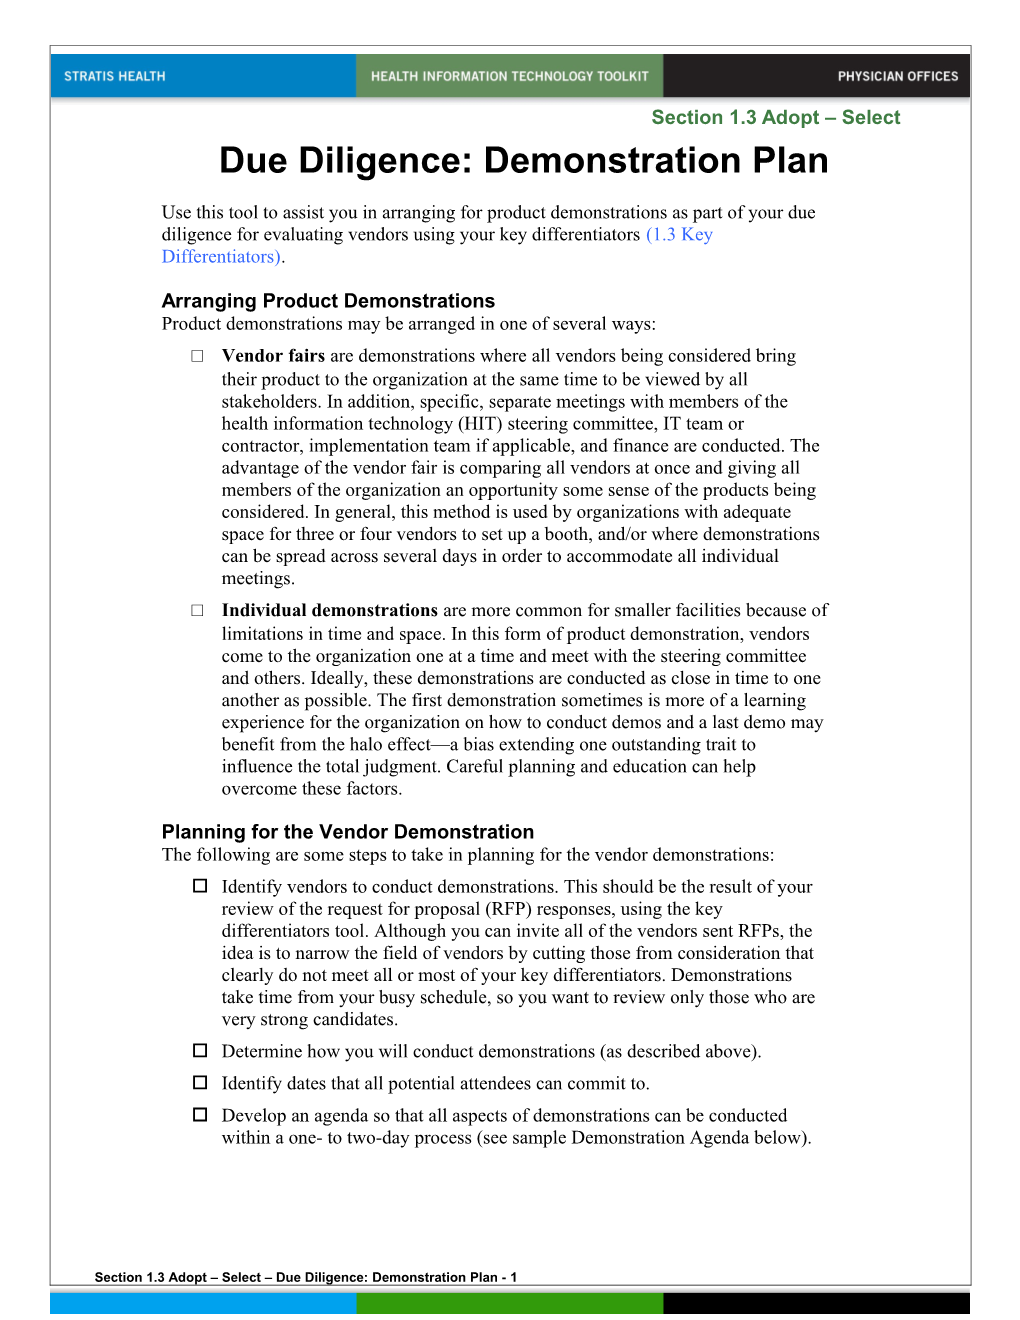 Due Diligence:Demonstration Plan